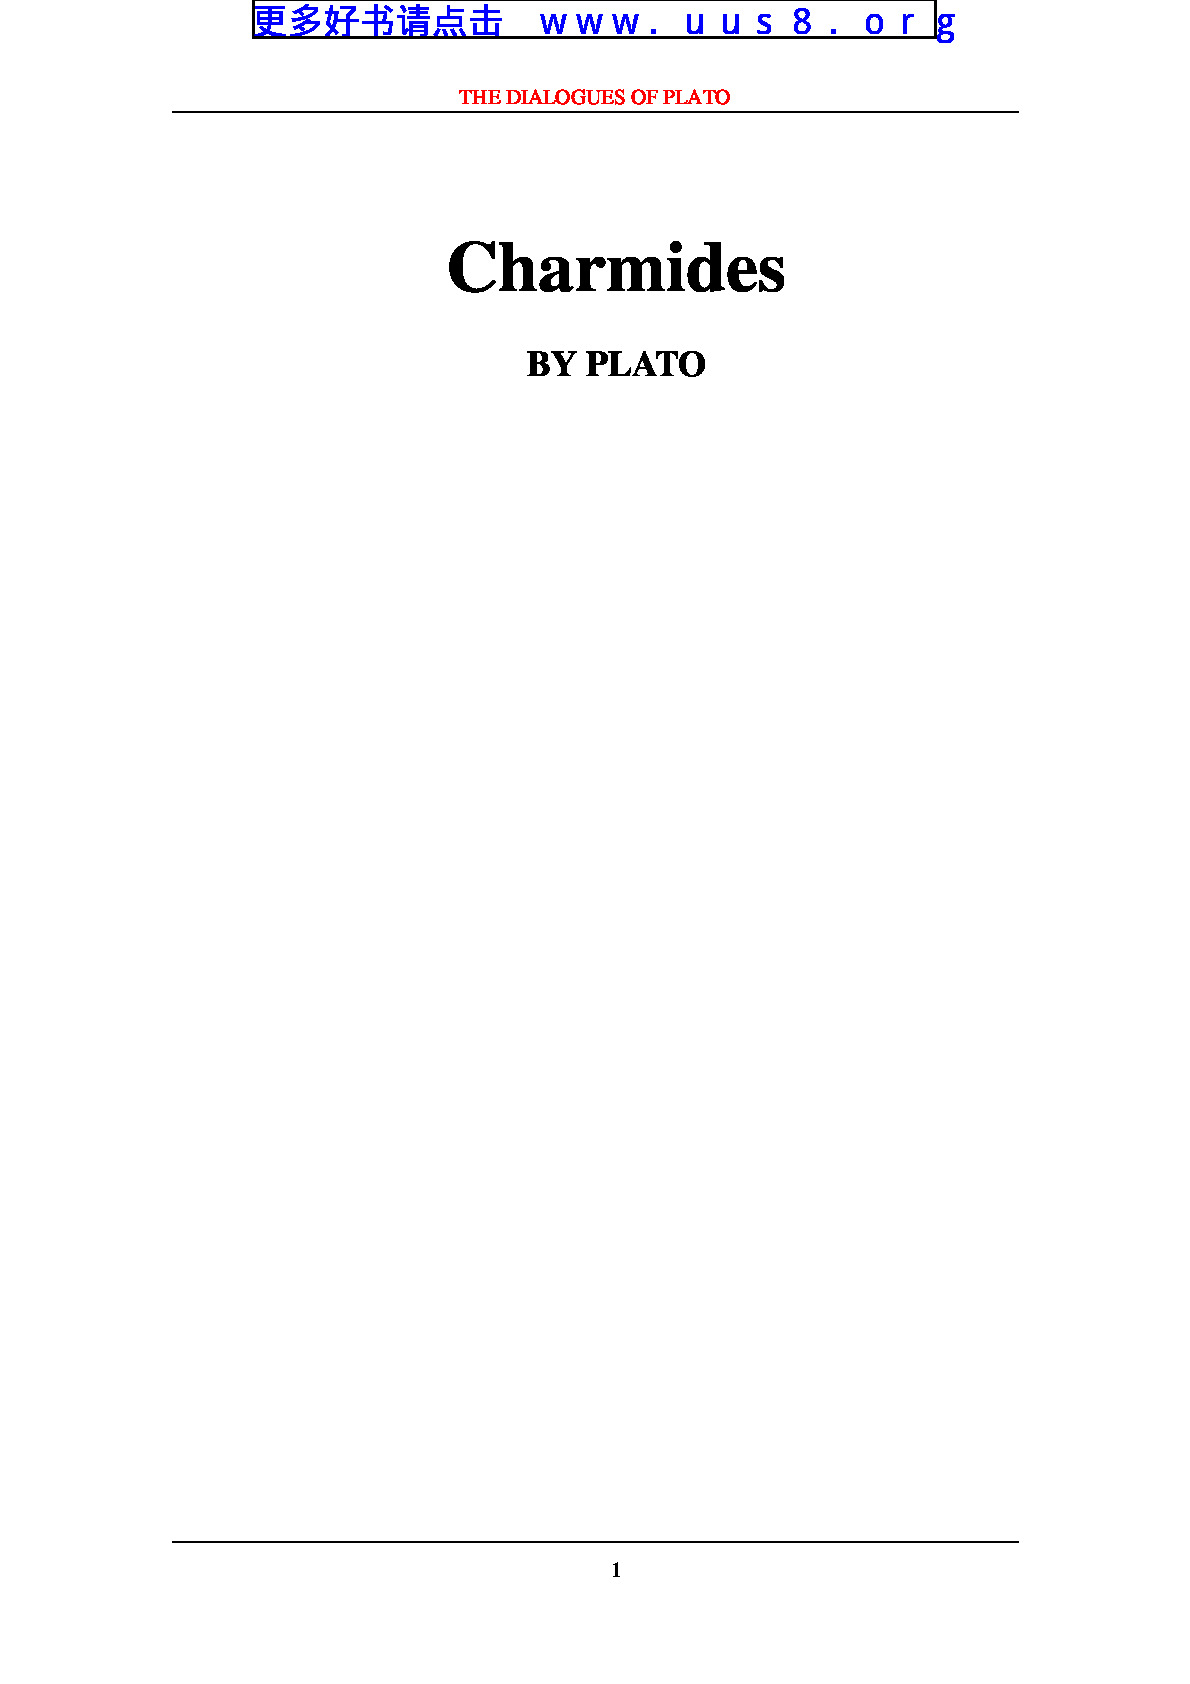 Charmides(查米德斯)